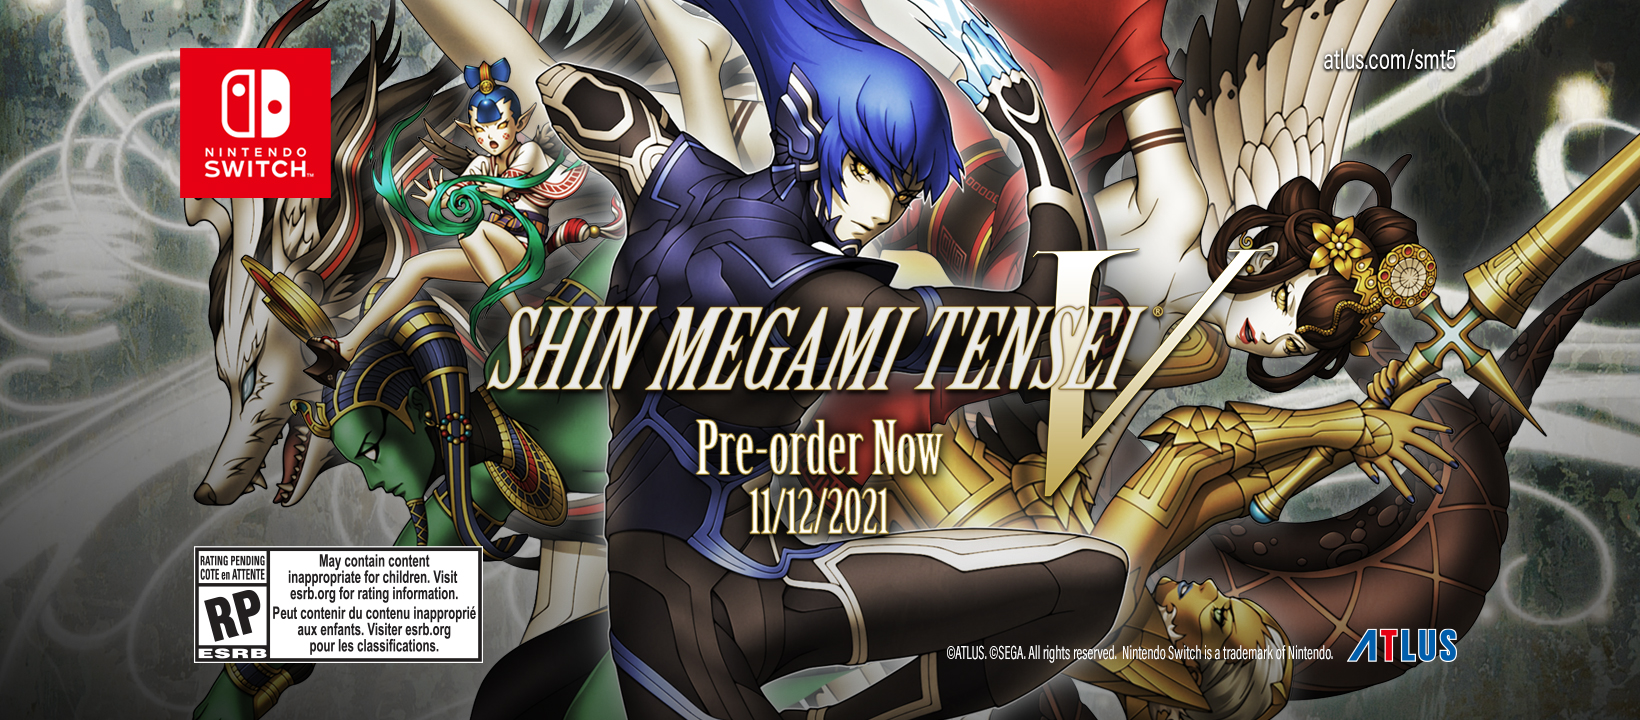  Shin Megami Tensei V Fall of Man Premium Edition (Nintendo  Switch) : Video Games